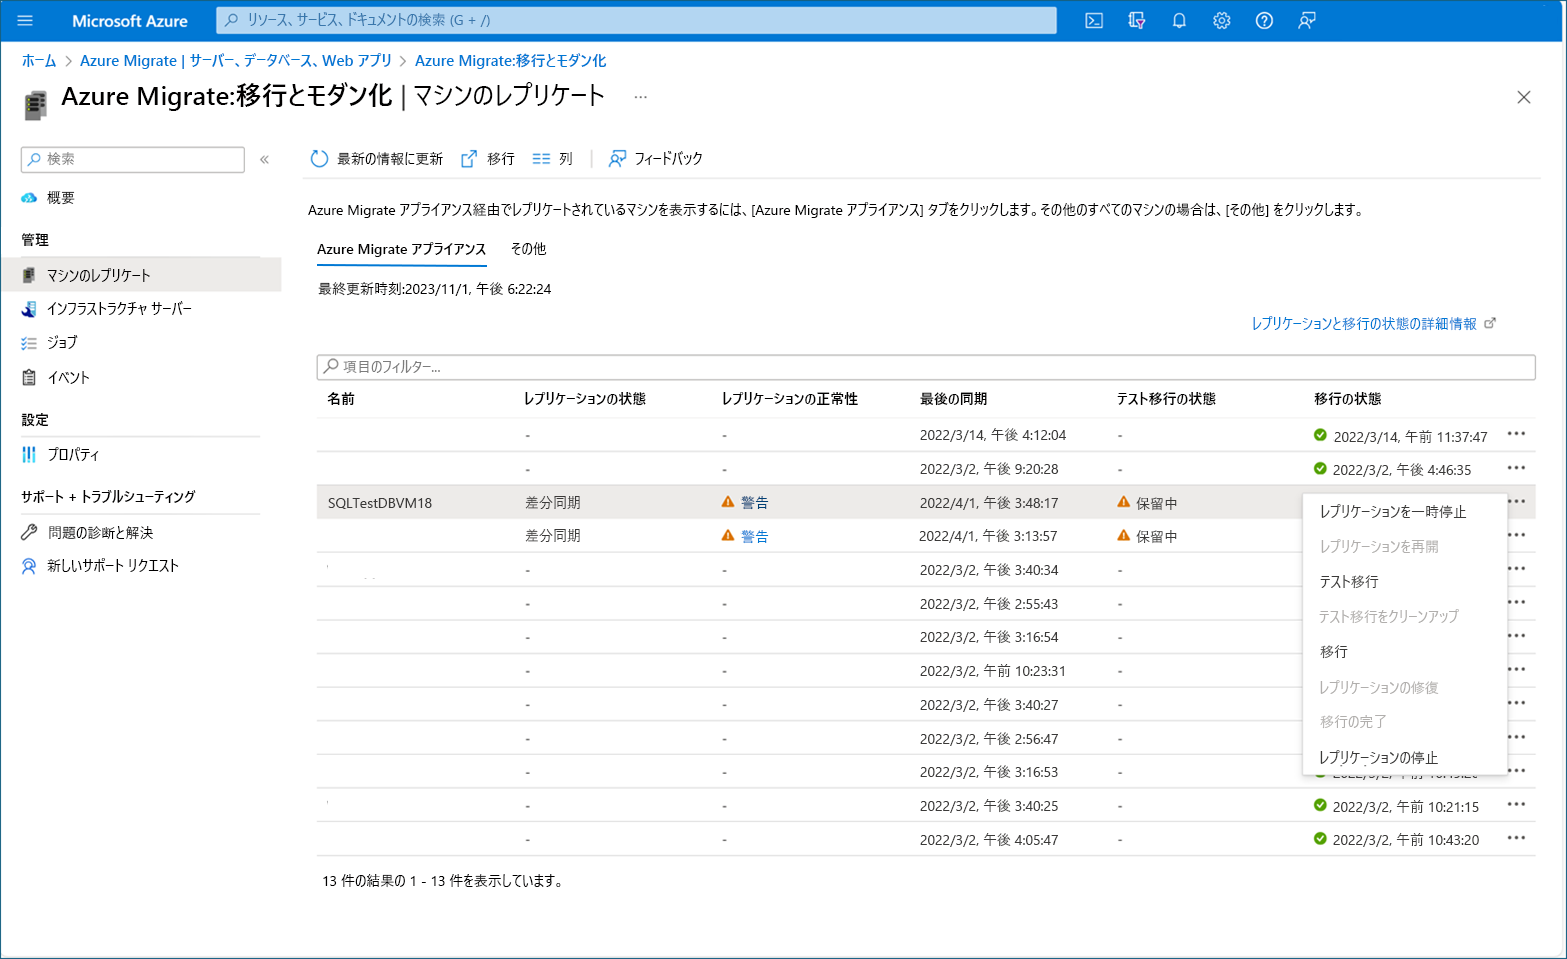 Screenshot of Azure Migrate replicating machines in the Azure portal.